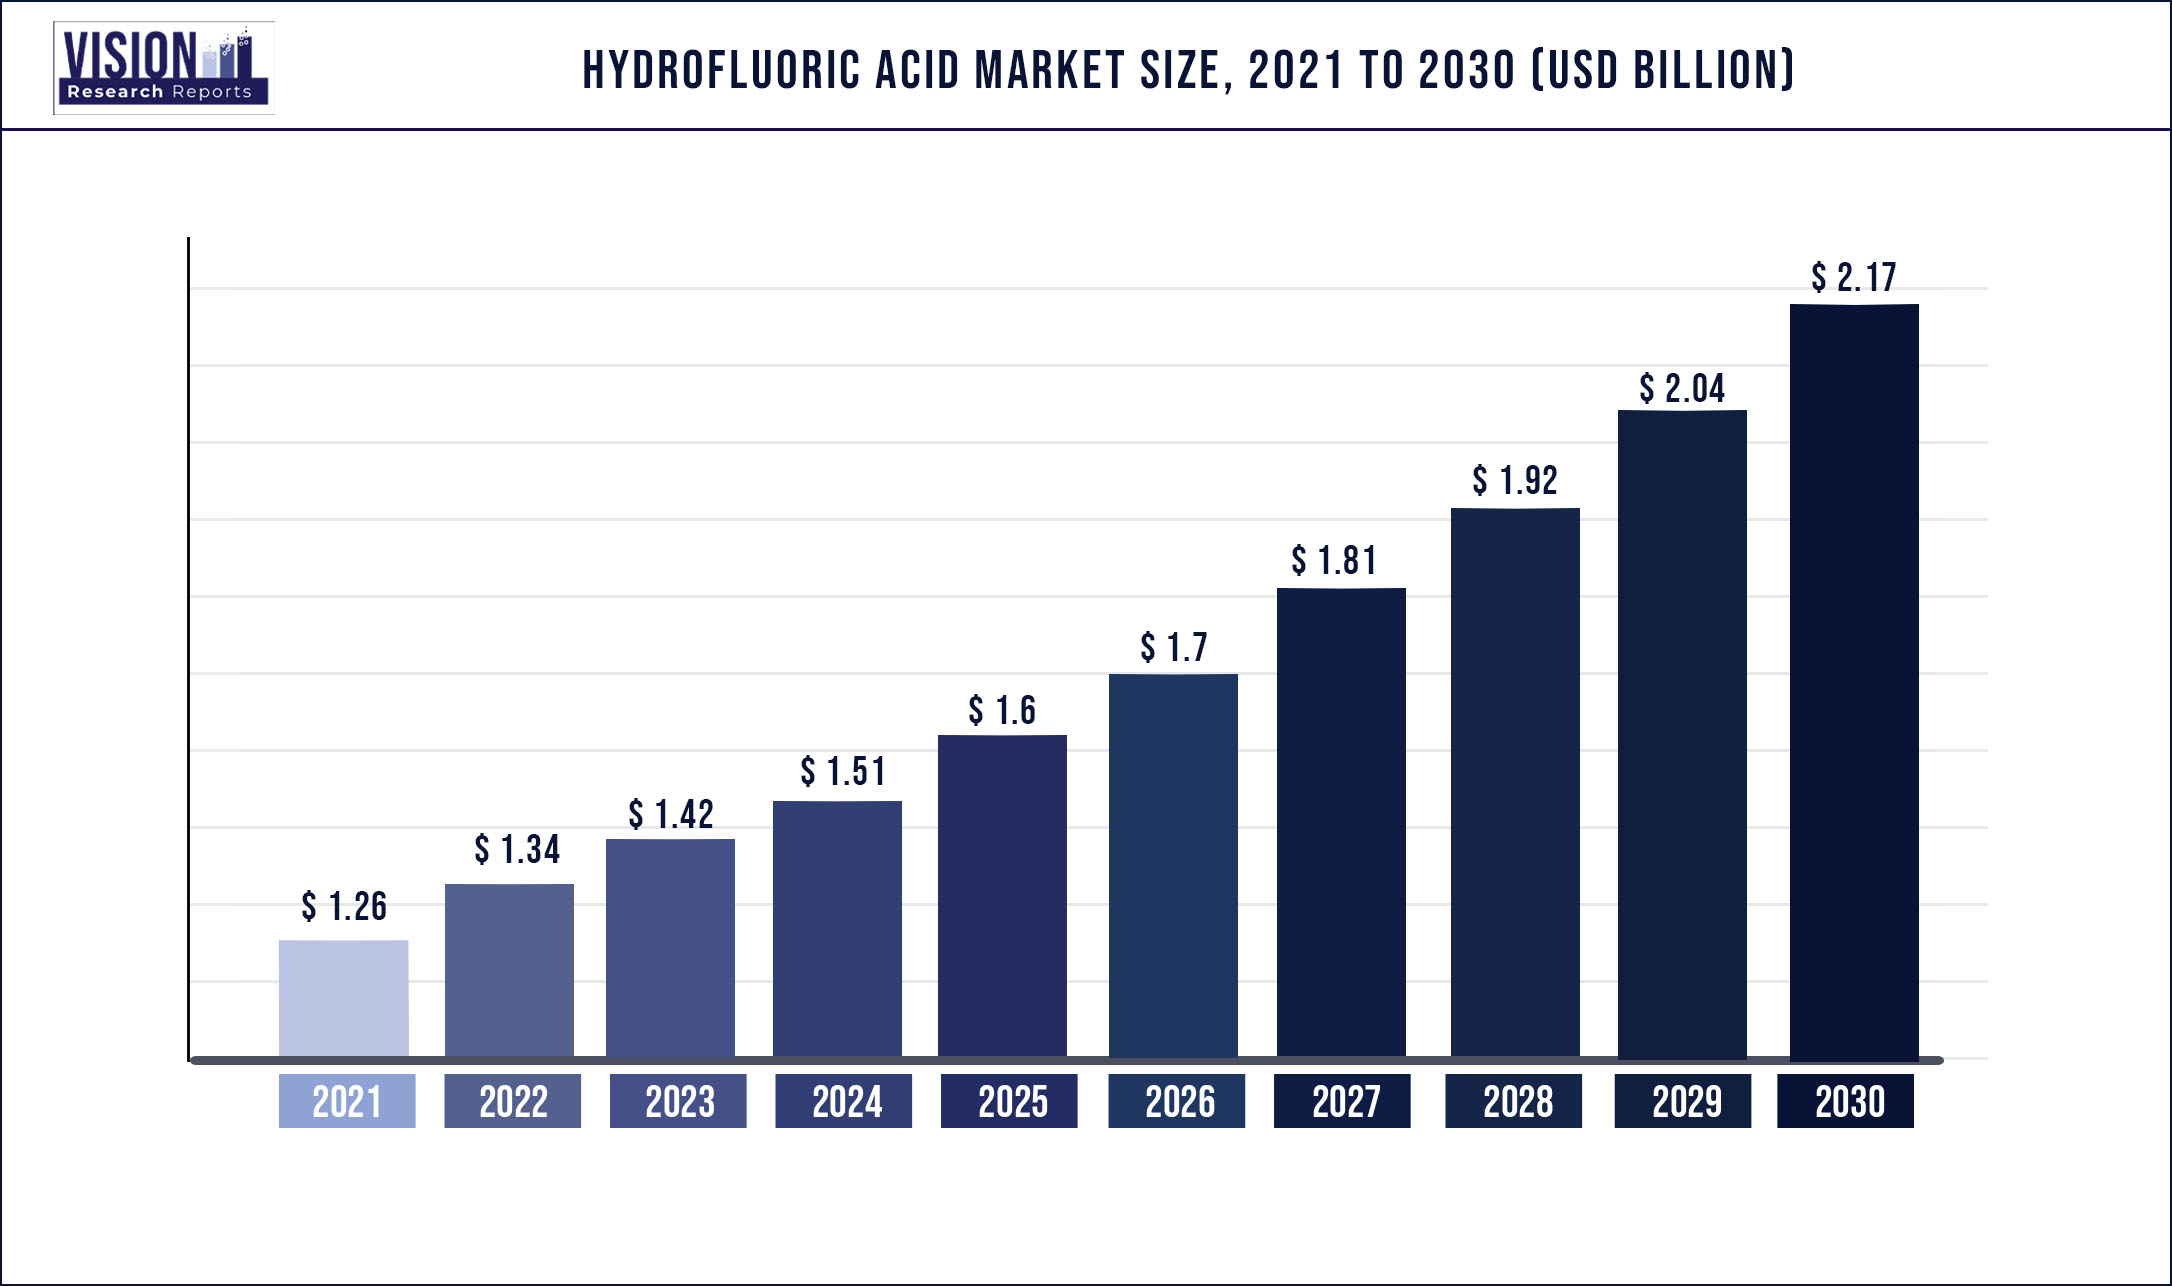 Hydrofluoric Acid Market Size 2021 to 2030